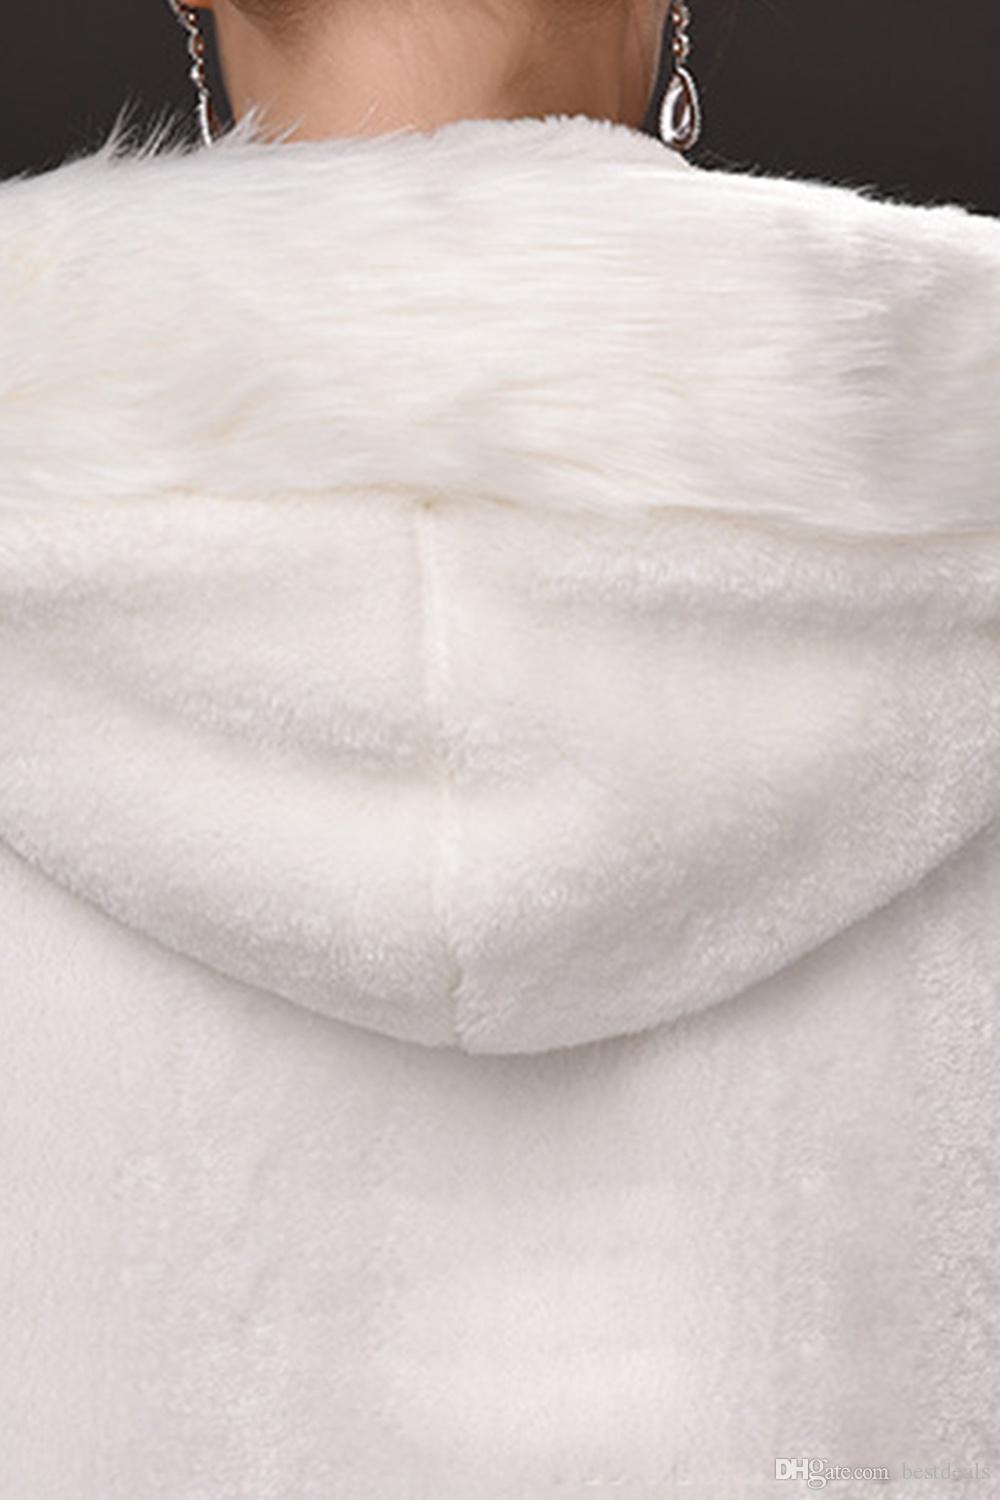 Winter War Faux Fur Bridal Cloak Warm Wraps Hooded Trim Floor Length Perfect Abaya Jacket for Wedding Cape Wraps Jacket CPA915